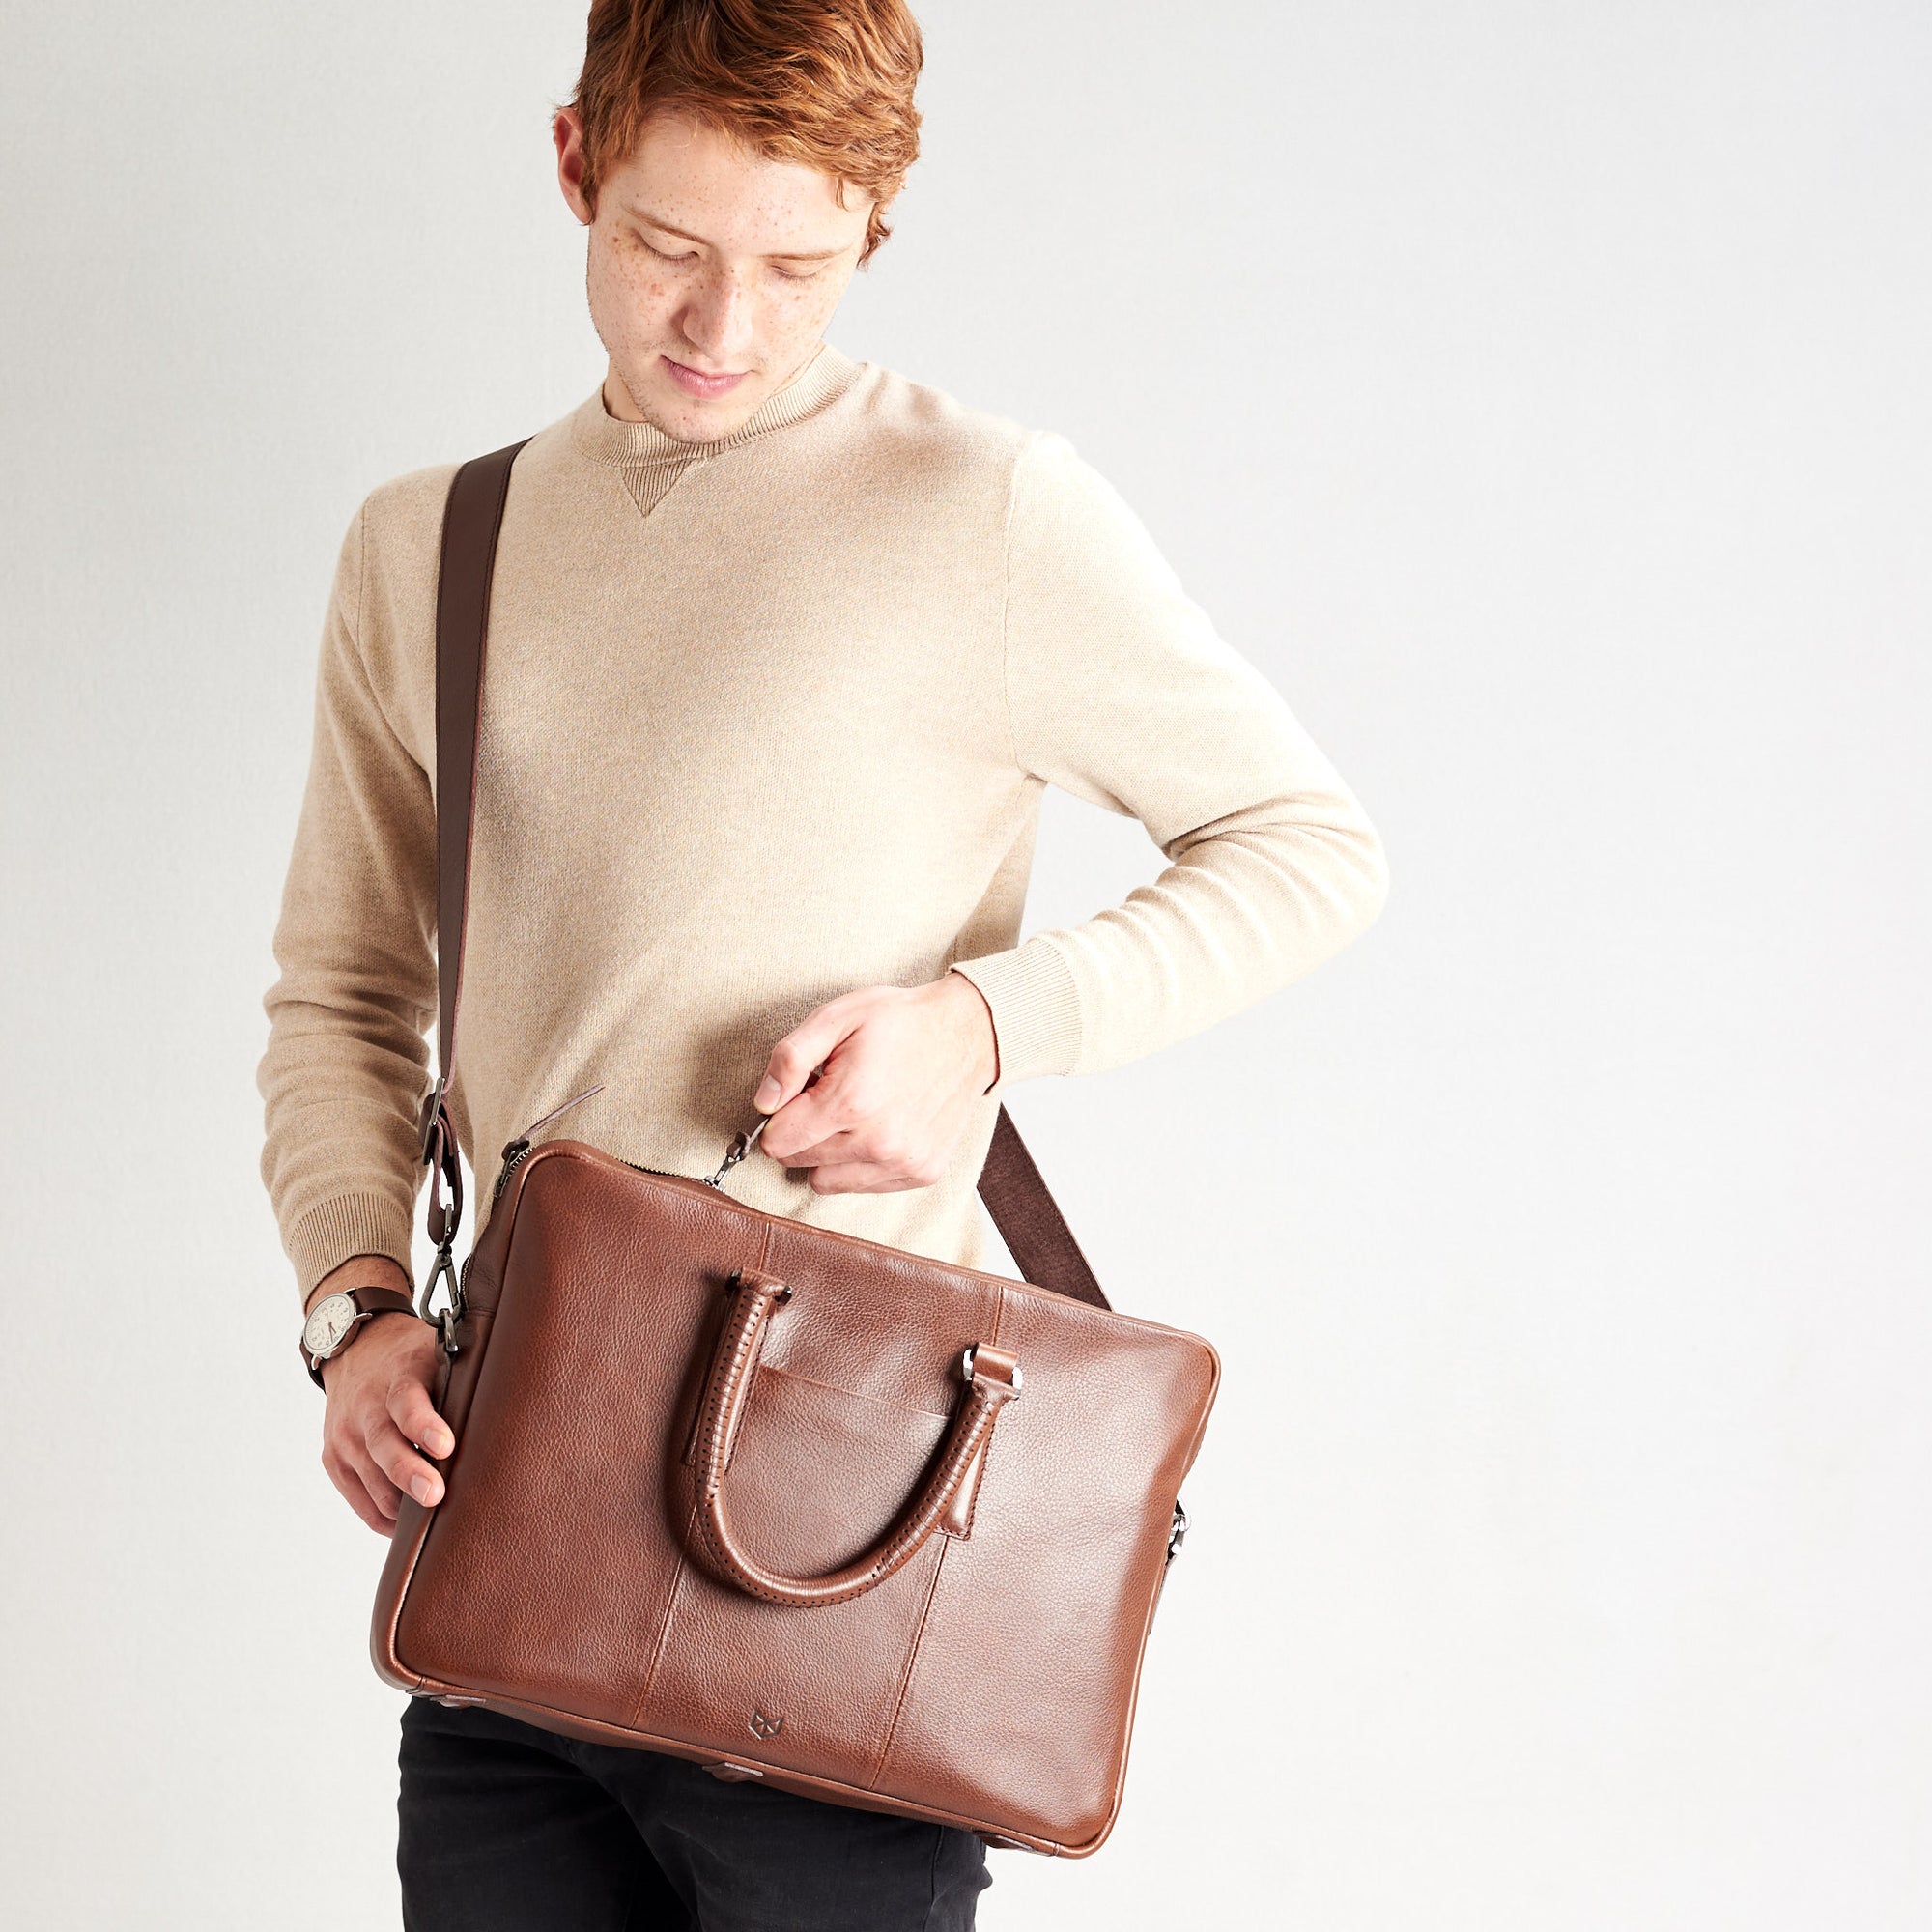 Shoulder bag in use by model. Brown leather briefcase laptop bag for men. Gazeli laptop briefcase by Capra Leather